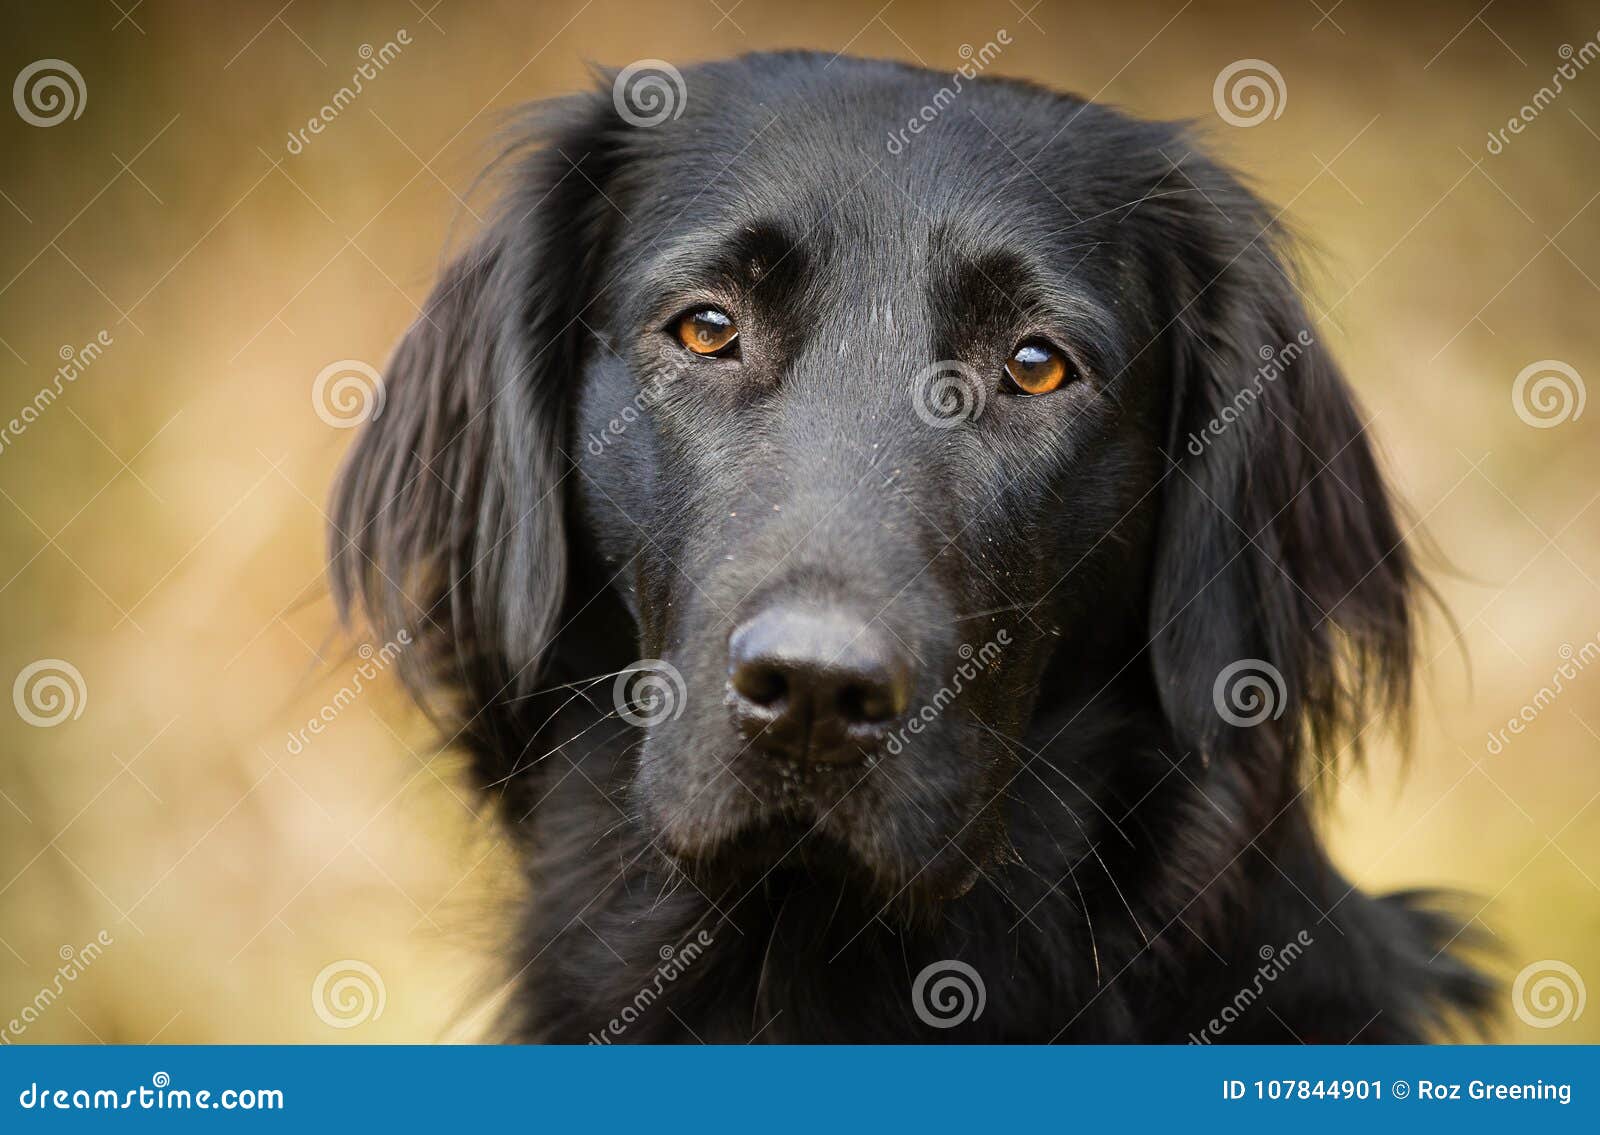 Flat Coated Retriever Dog Portrait Stock Image Image Of Hunter Retriever 107844901